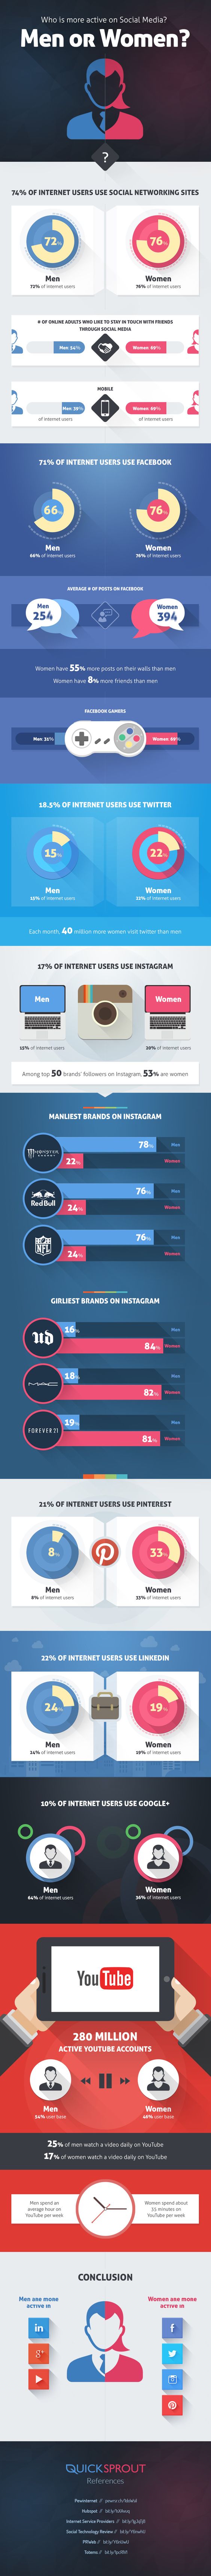 Who Is More Active on Social Media? Men or Women? - #infographic #SocialMedia